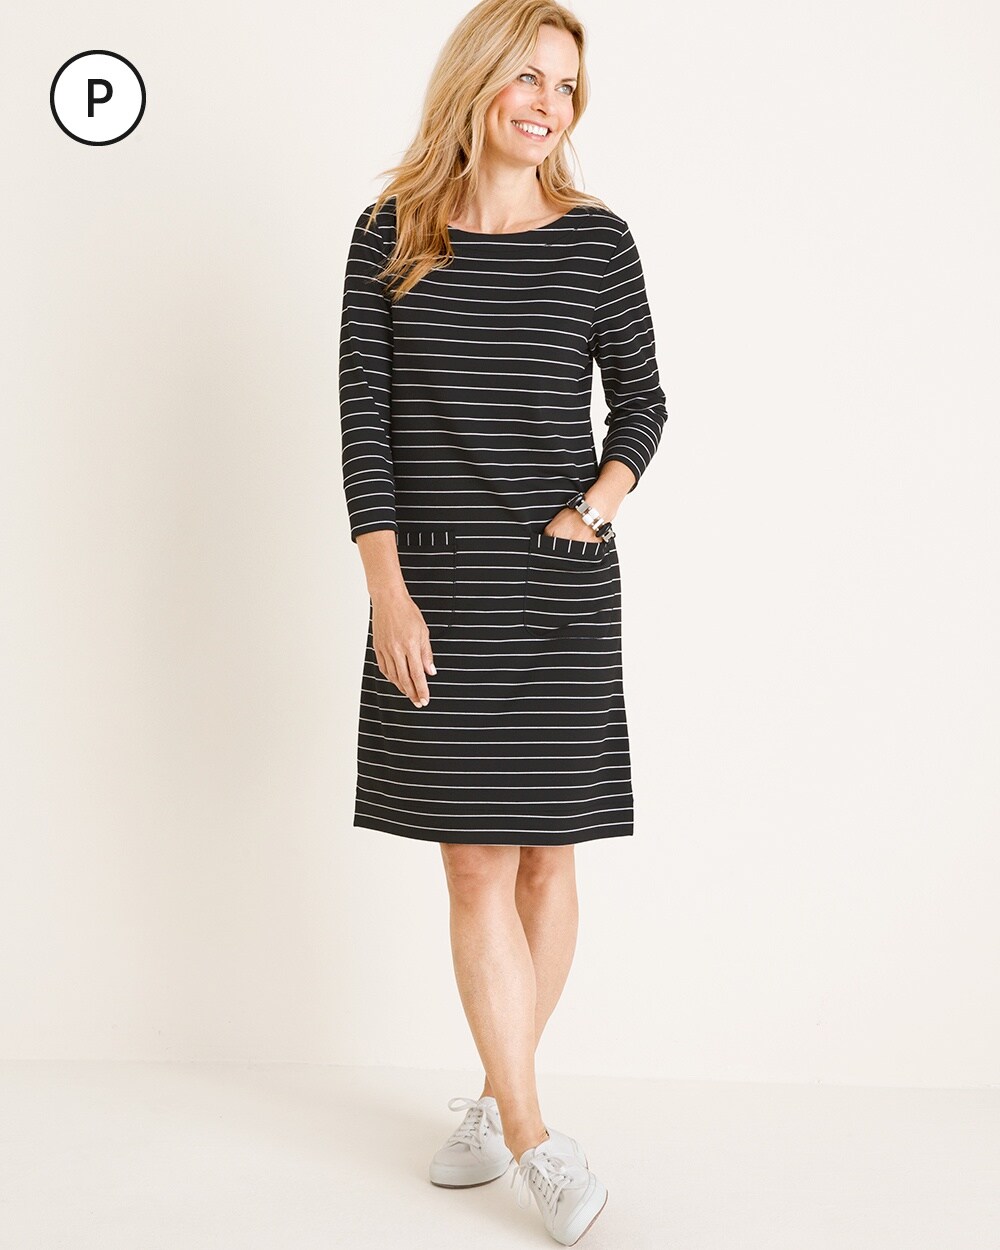 Zenergy Petite Striped Knit Dress